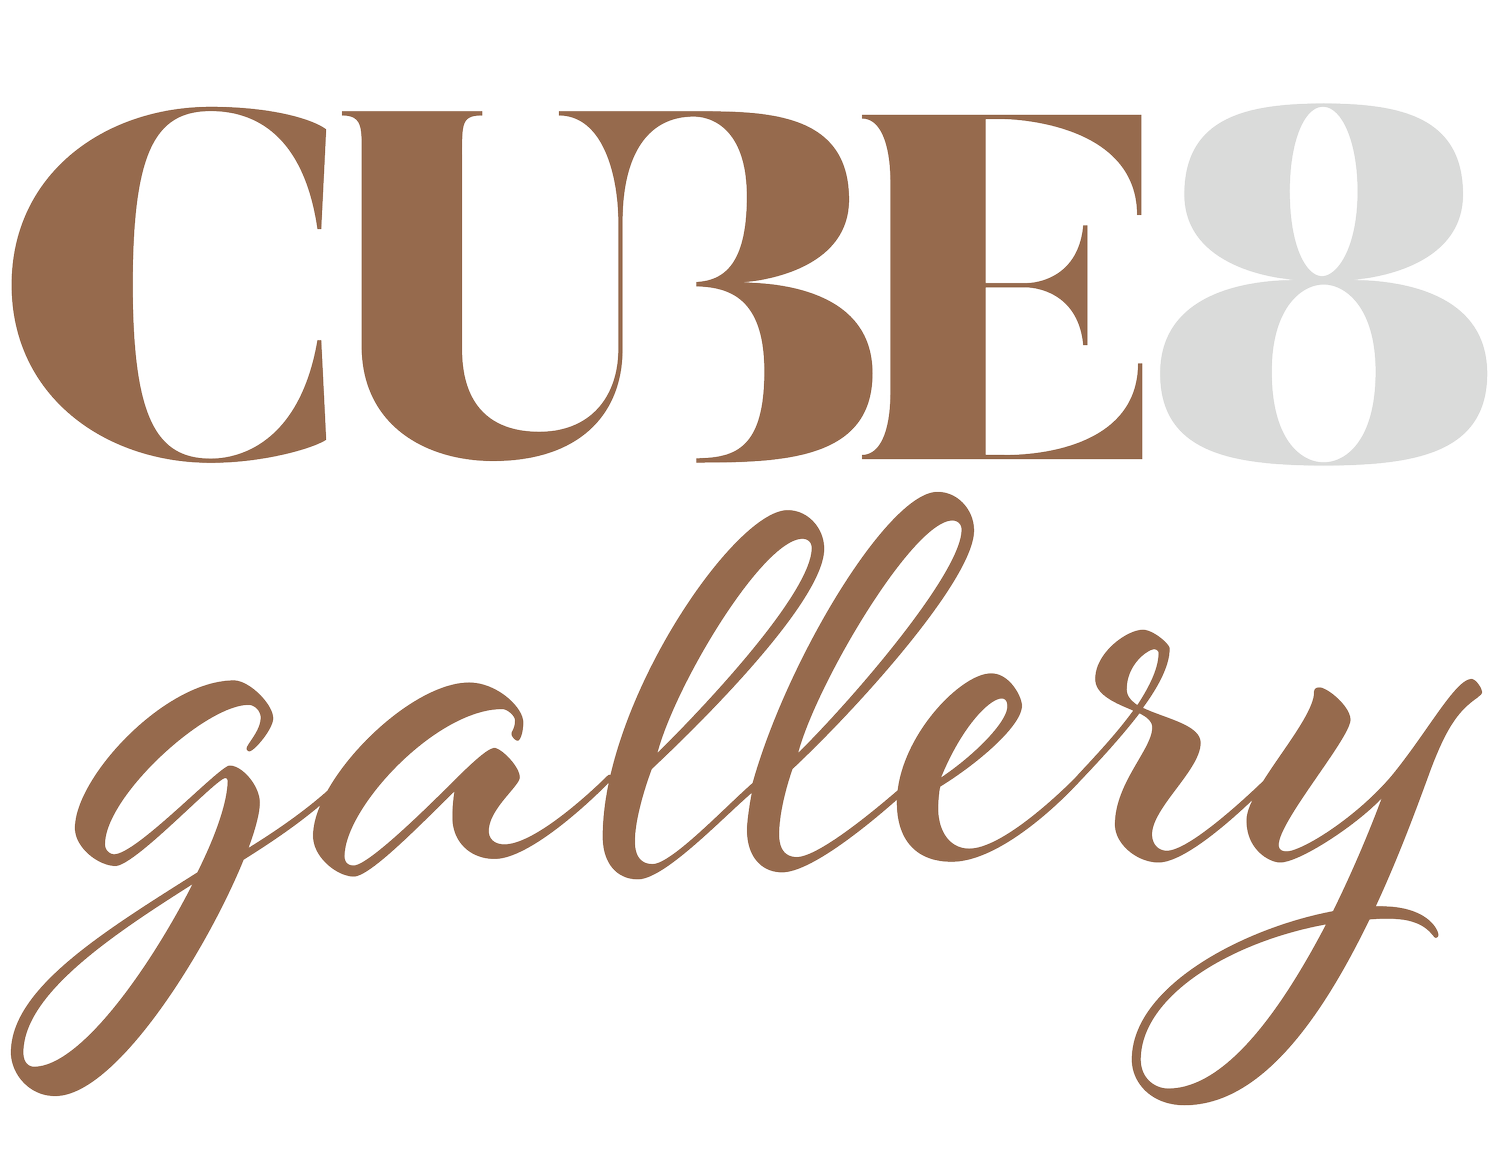 CUBE8 GALLERY